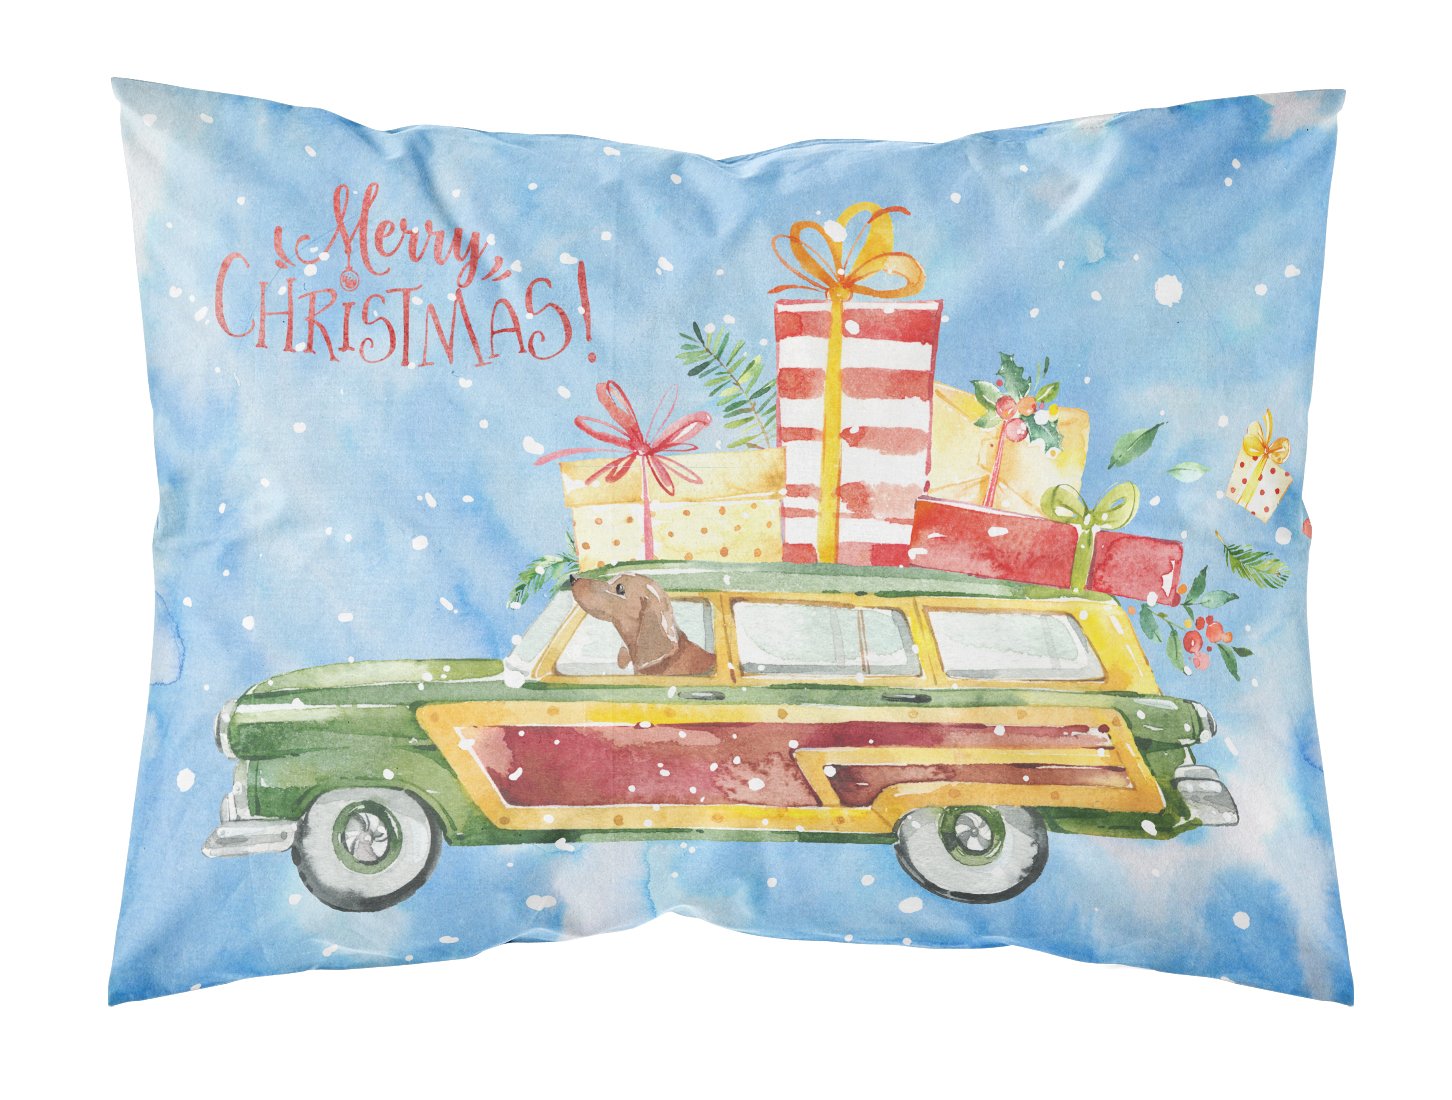 Merry Christmas Red Dachshund Fabric Standard Pillowcase CK2465PILLOWCASE by Caroline's Treasures